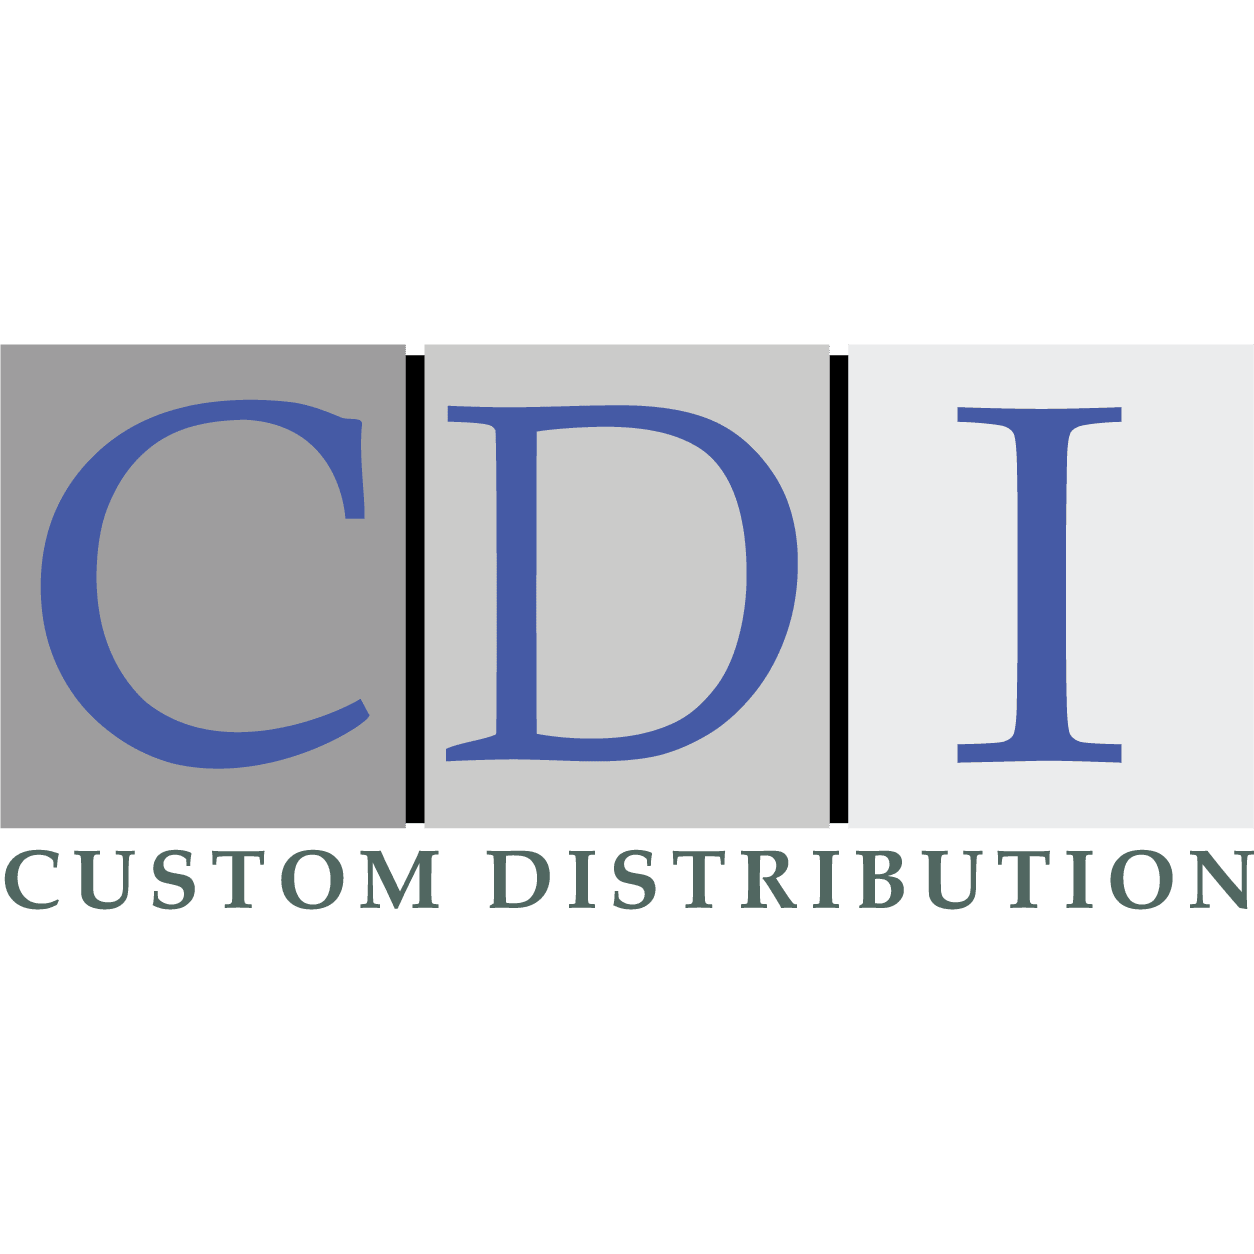 Custom Distribution